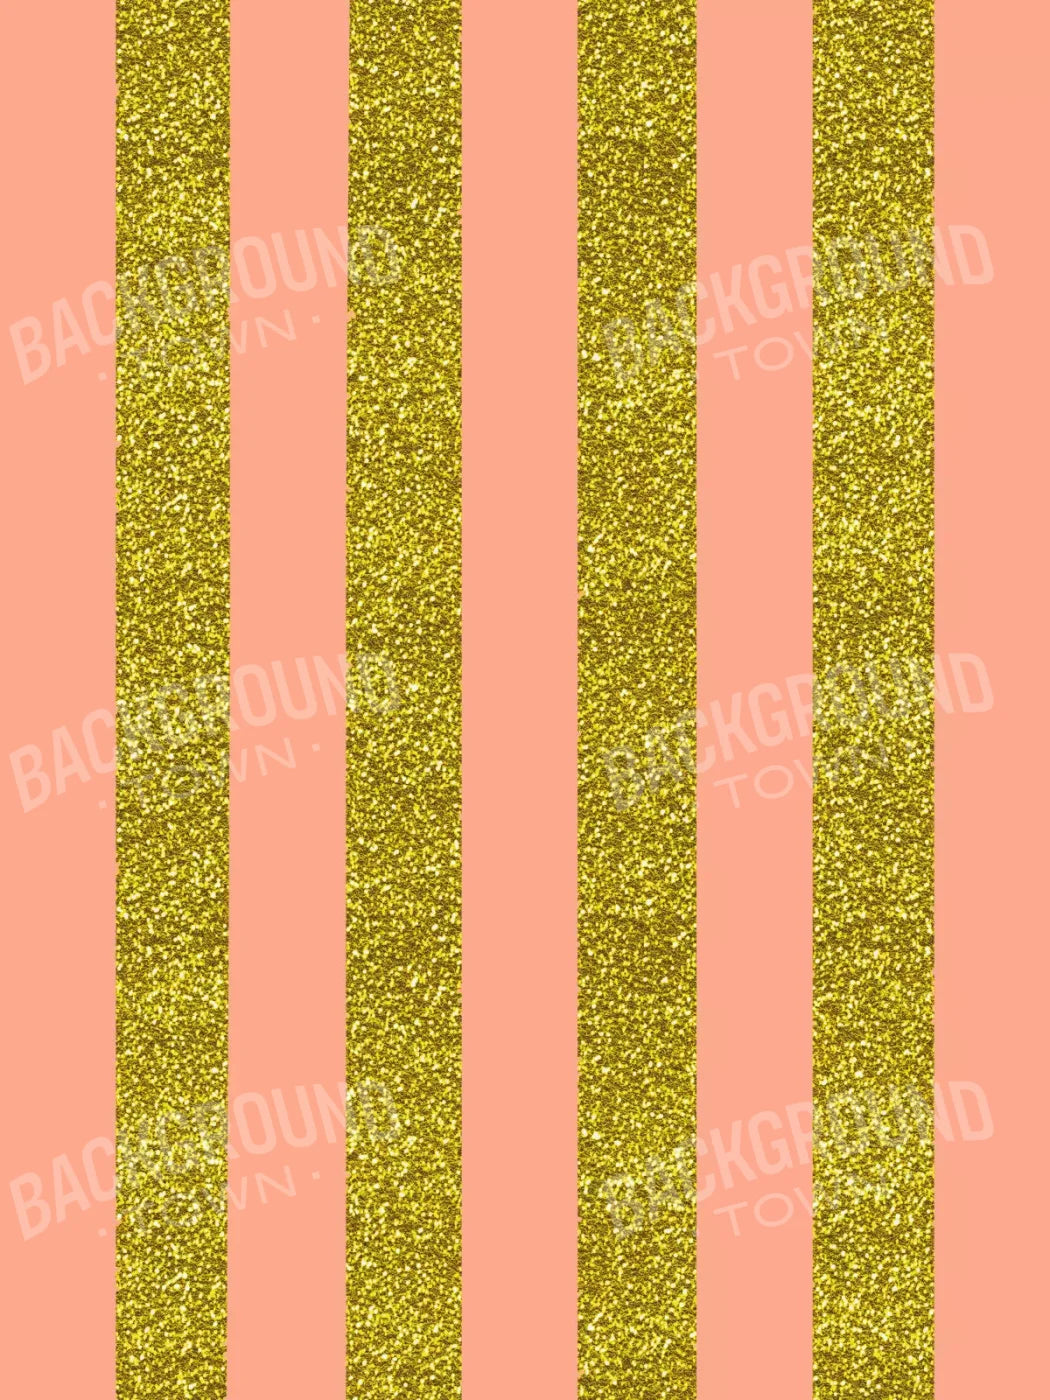 Stripes Coral Gold 5X68 Fleece ( 60 X 80 Inch ) Backdrop